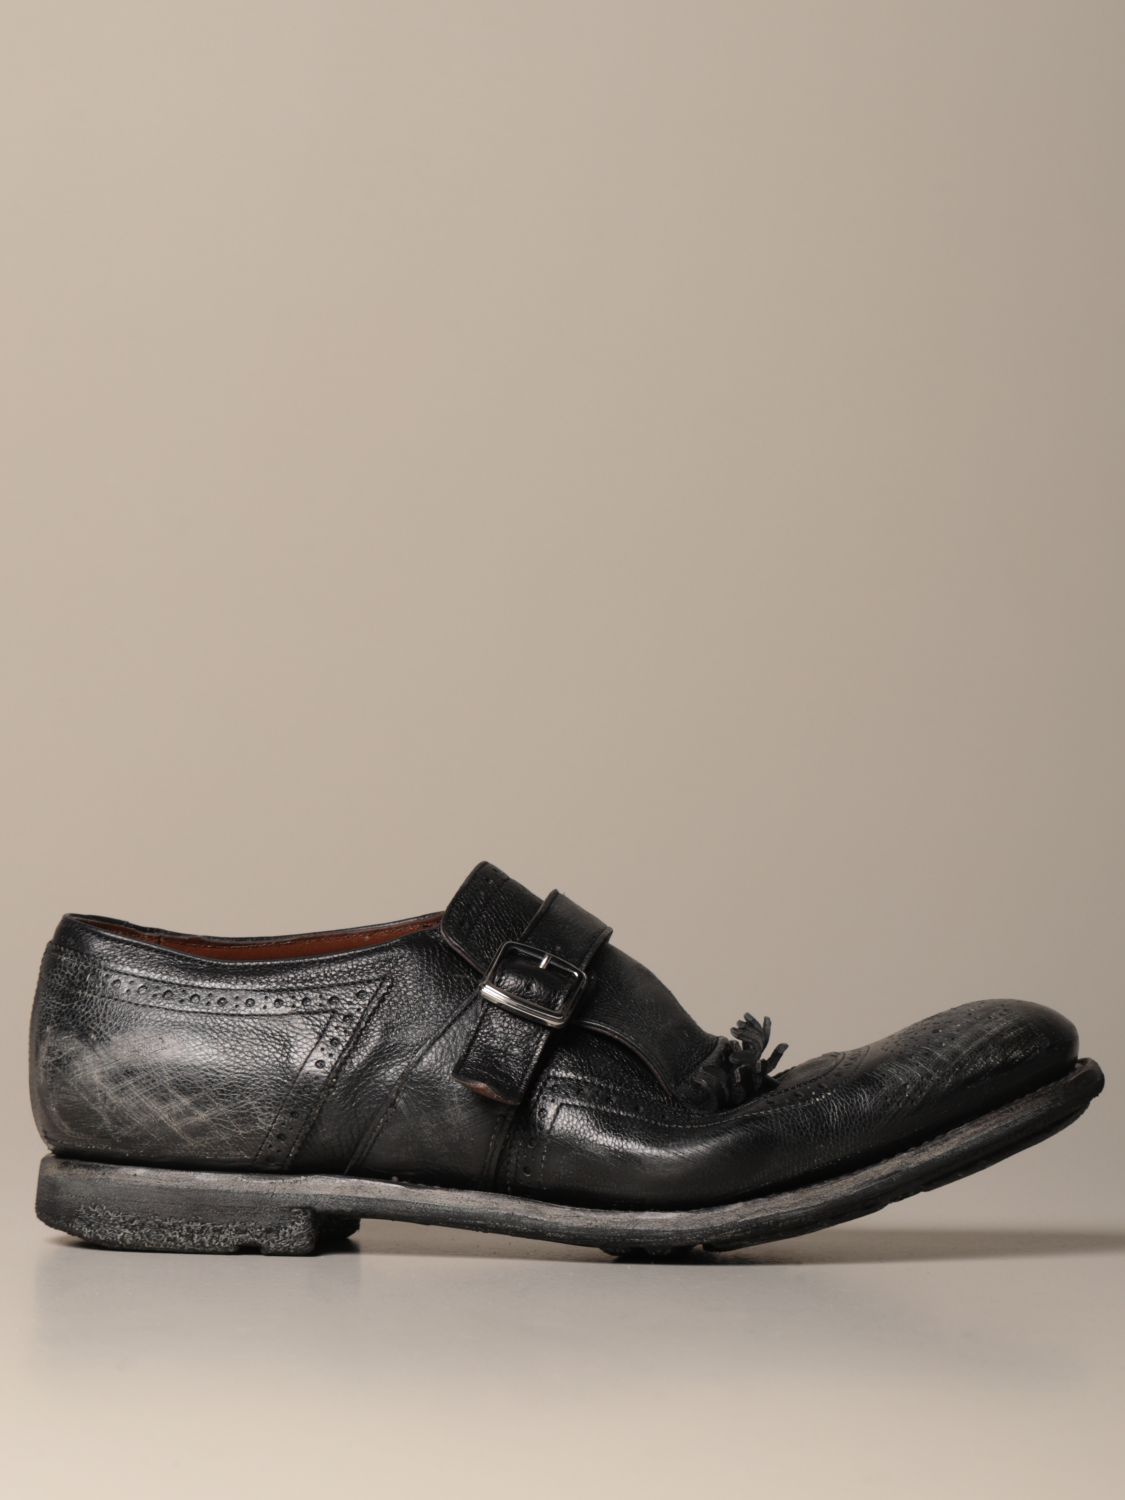 vintage leather shoes